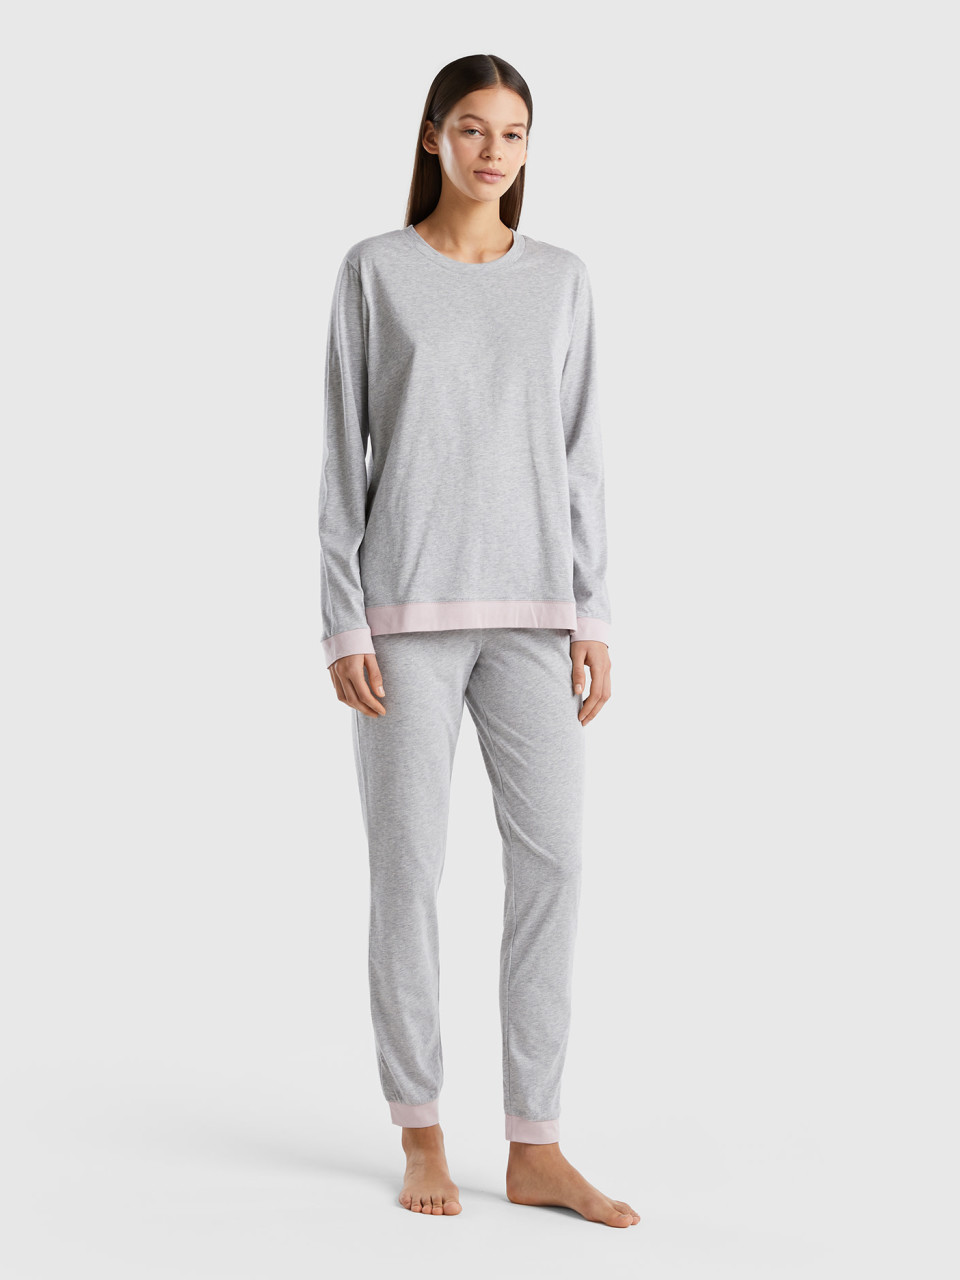 Benetton, Pyjamas In Long Fiber Cotton, Light Gray, Women